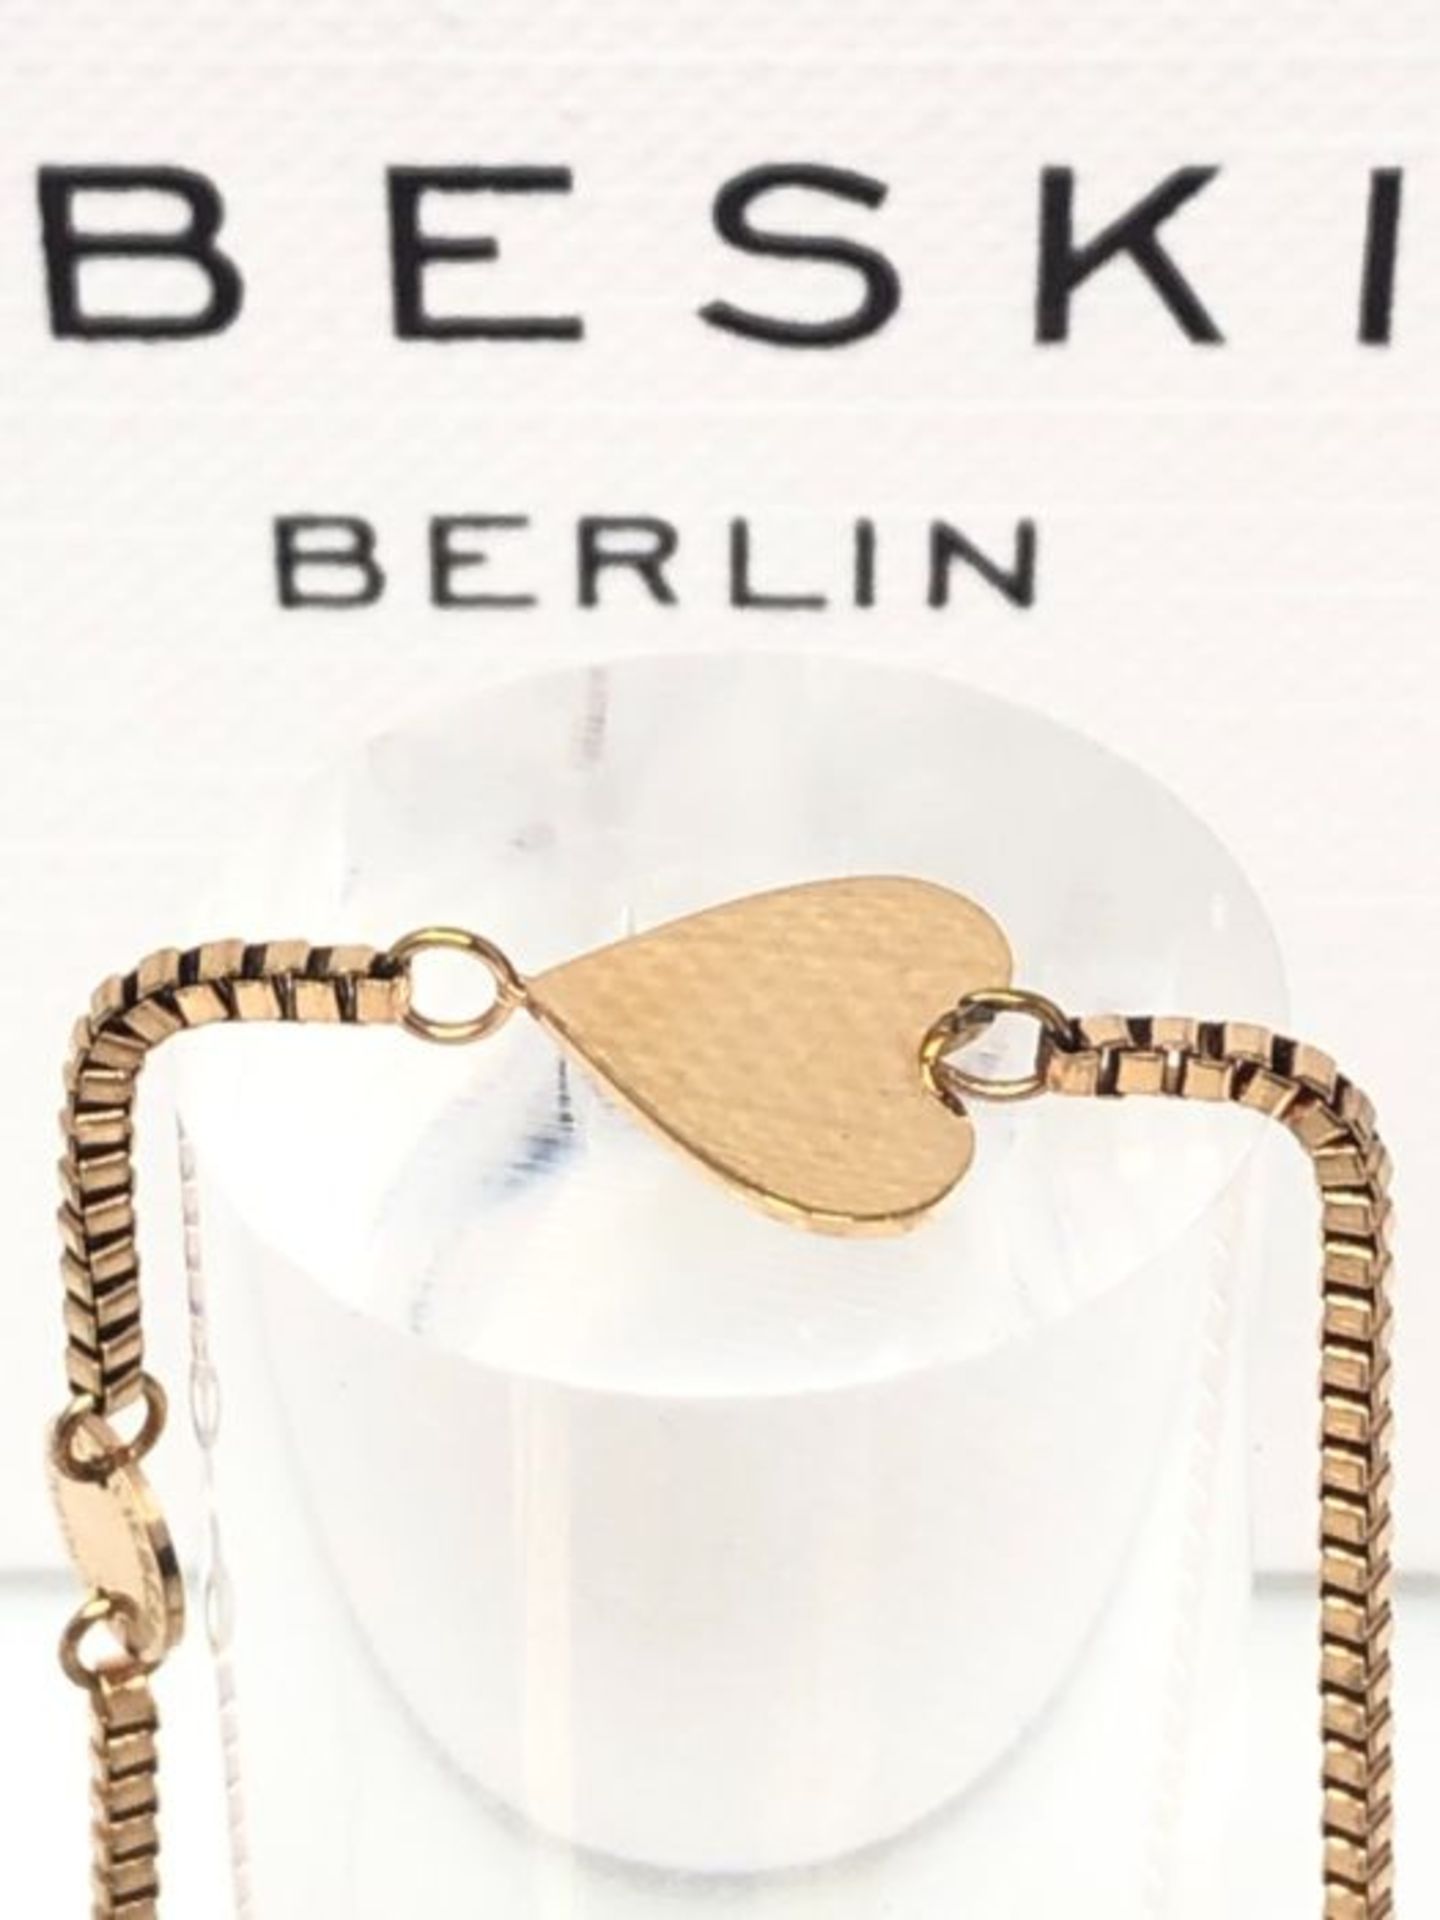 Liebeskind Berlin Bracelet, 20 centimeters, Stainless Steel, 0, - Image 3 of 3